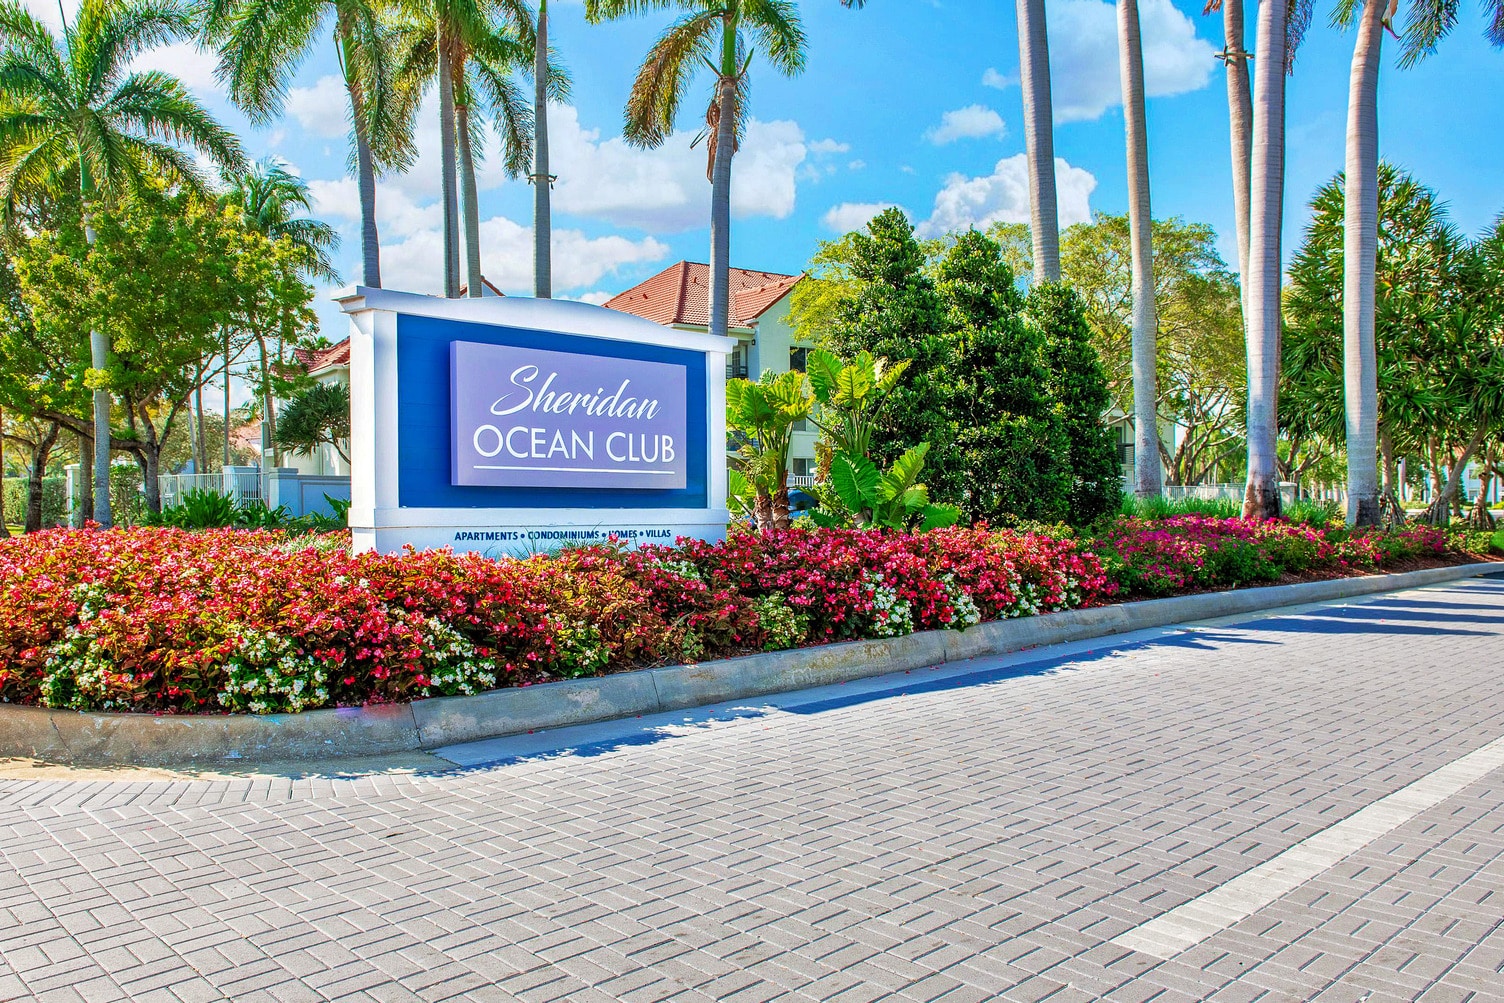 Contact Us | Sheridan Ocean Club Apartments in Dania Beach, FL